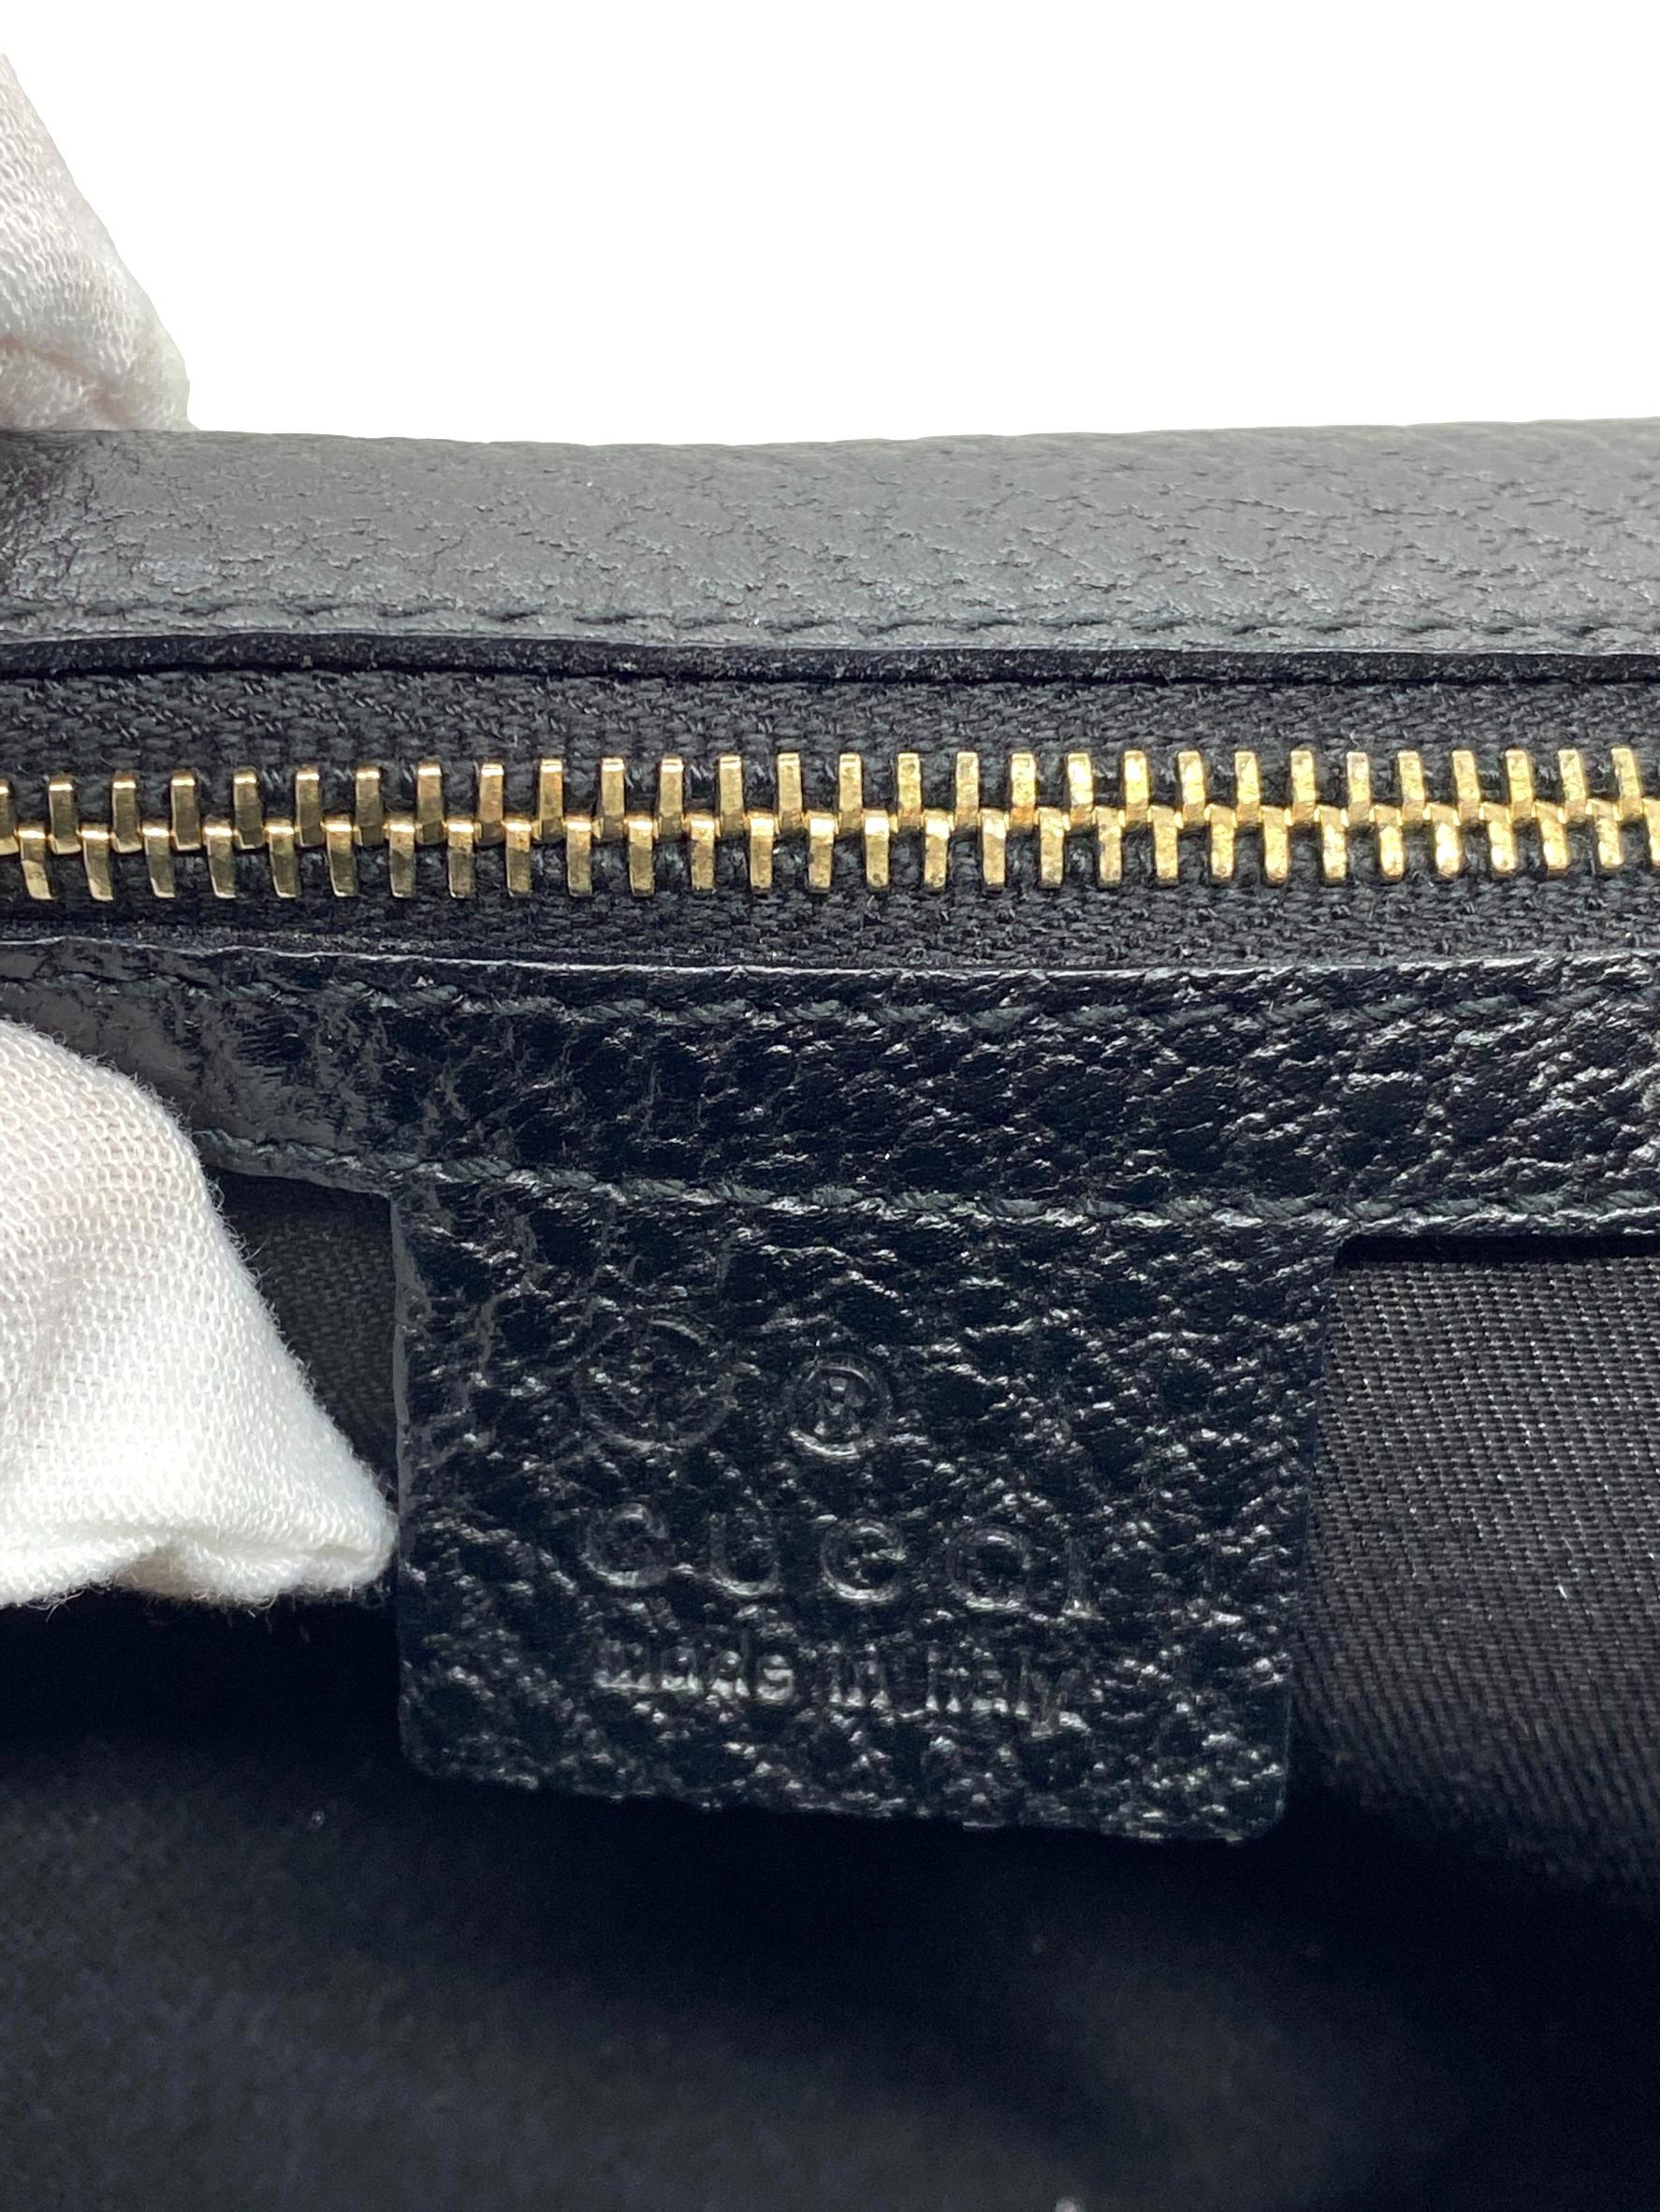 Gucci Web Pebbled Calfskin Blondie Shoulder Top Handle Flap Bag by Tom ...